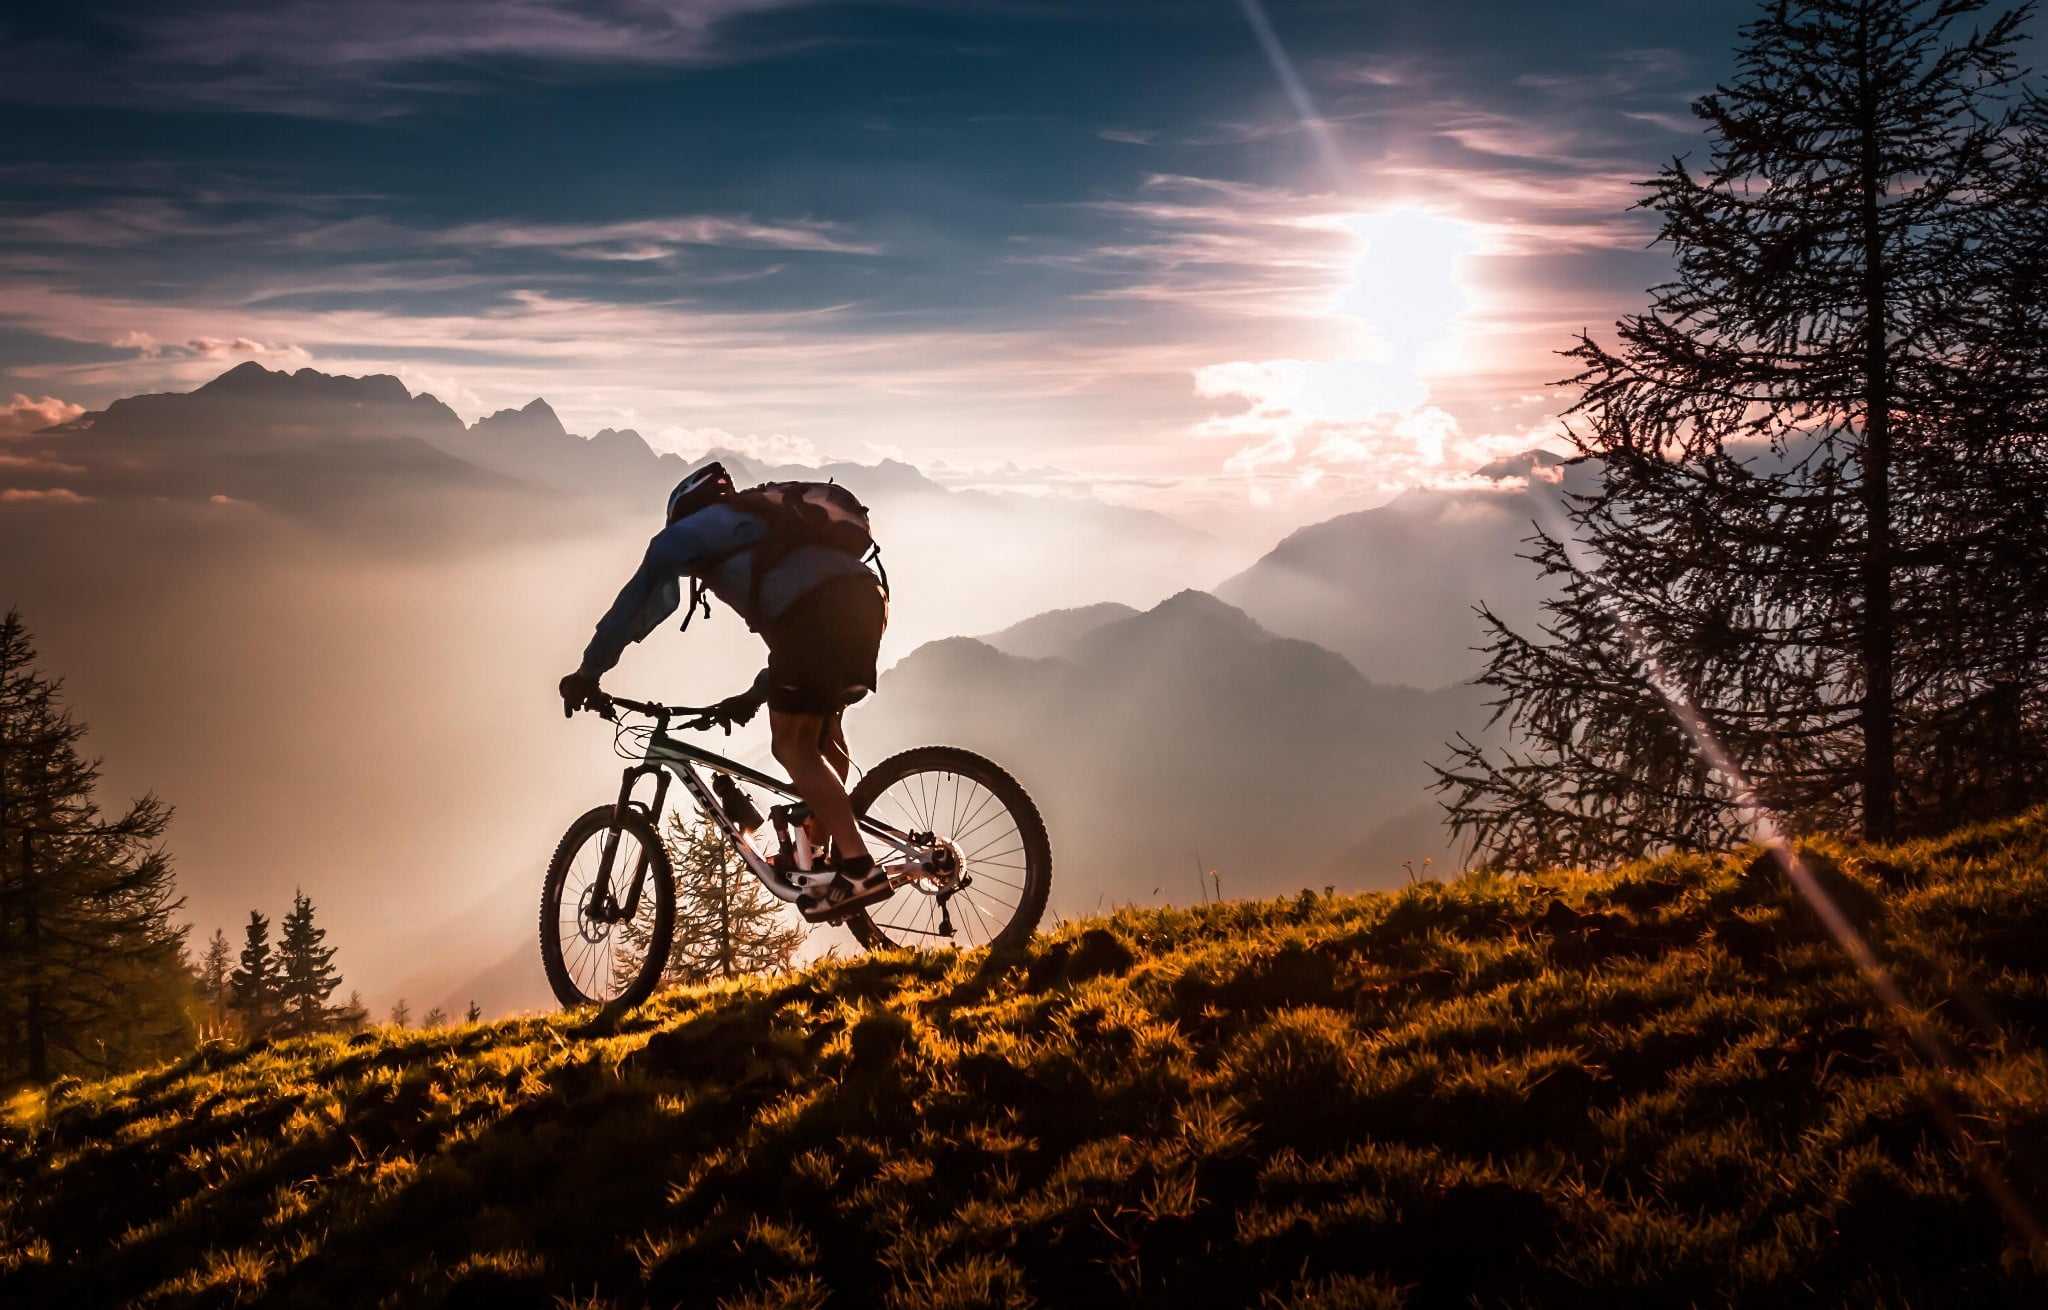 Aesthetic Mountain Biking Wallpaper - KoLPaPer - Awesome Free HD Wallpapers